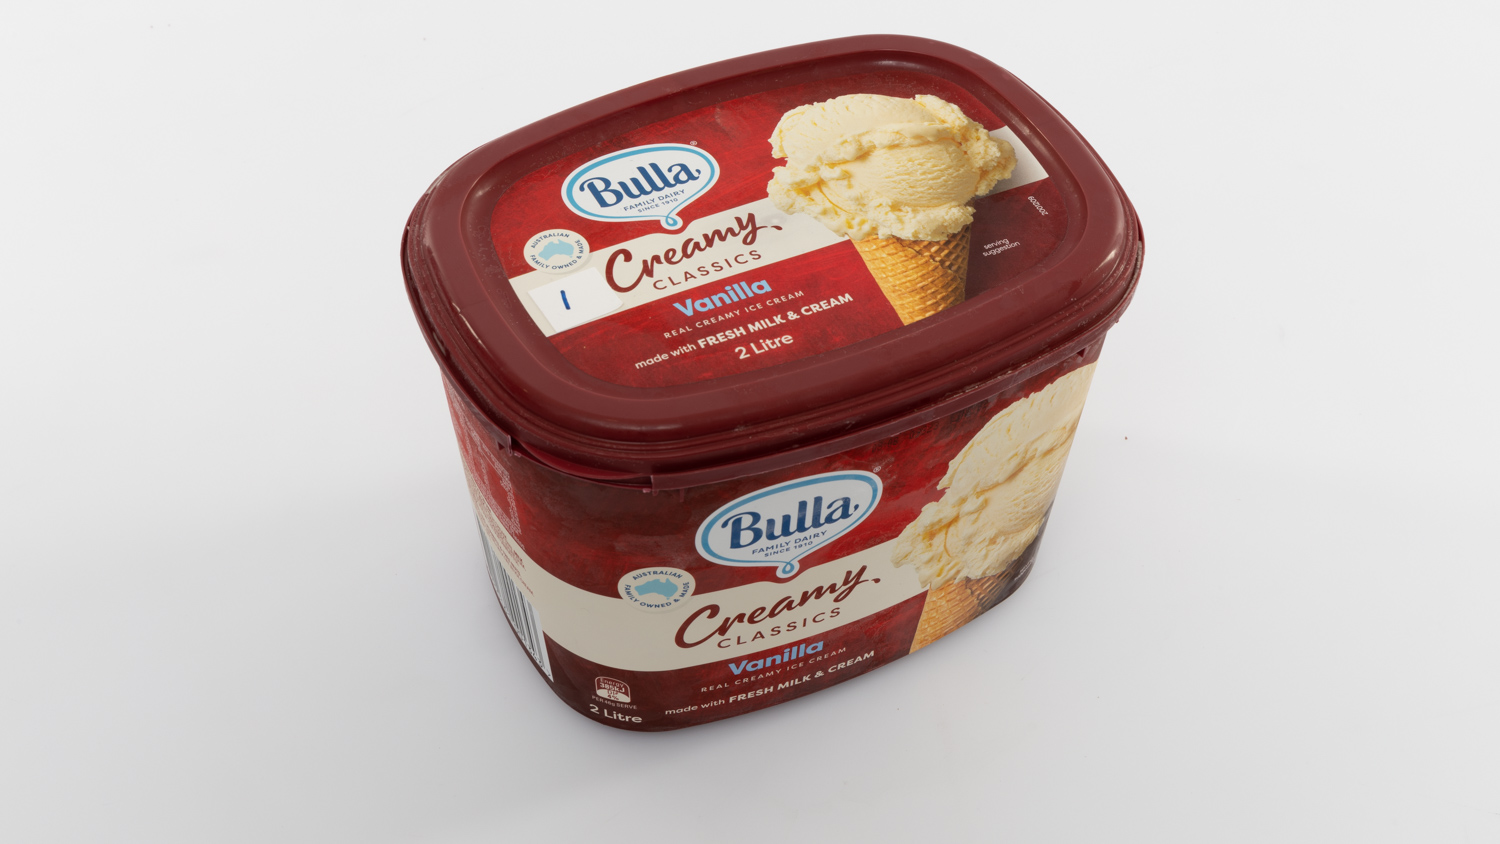 Bulla Creamy Classics Real Vanilla Ice Cream carousel image